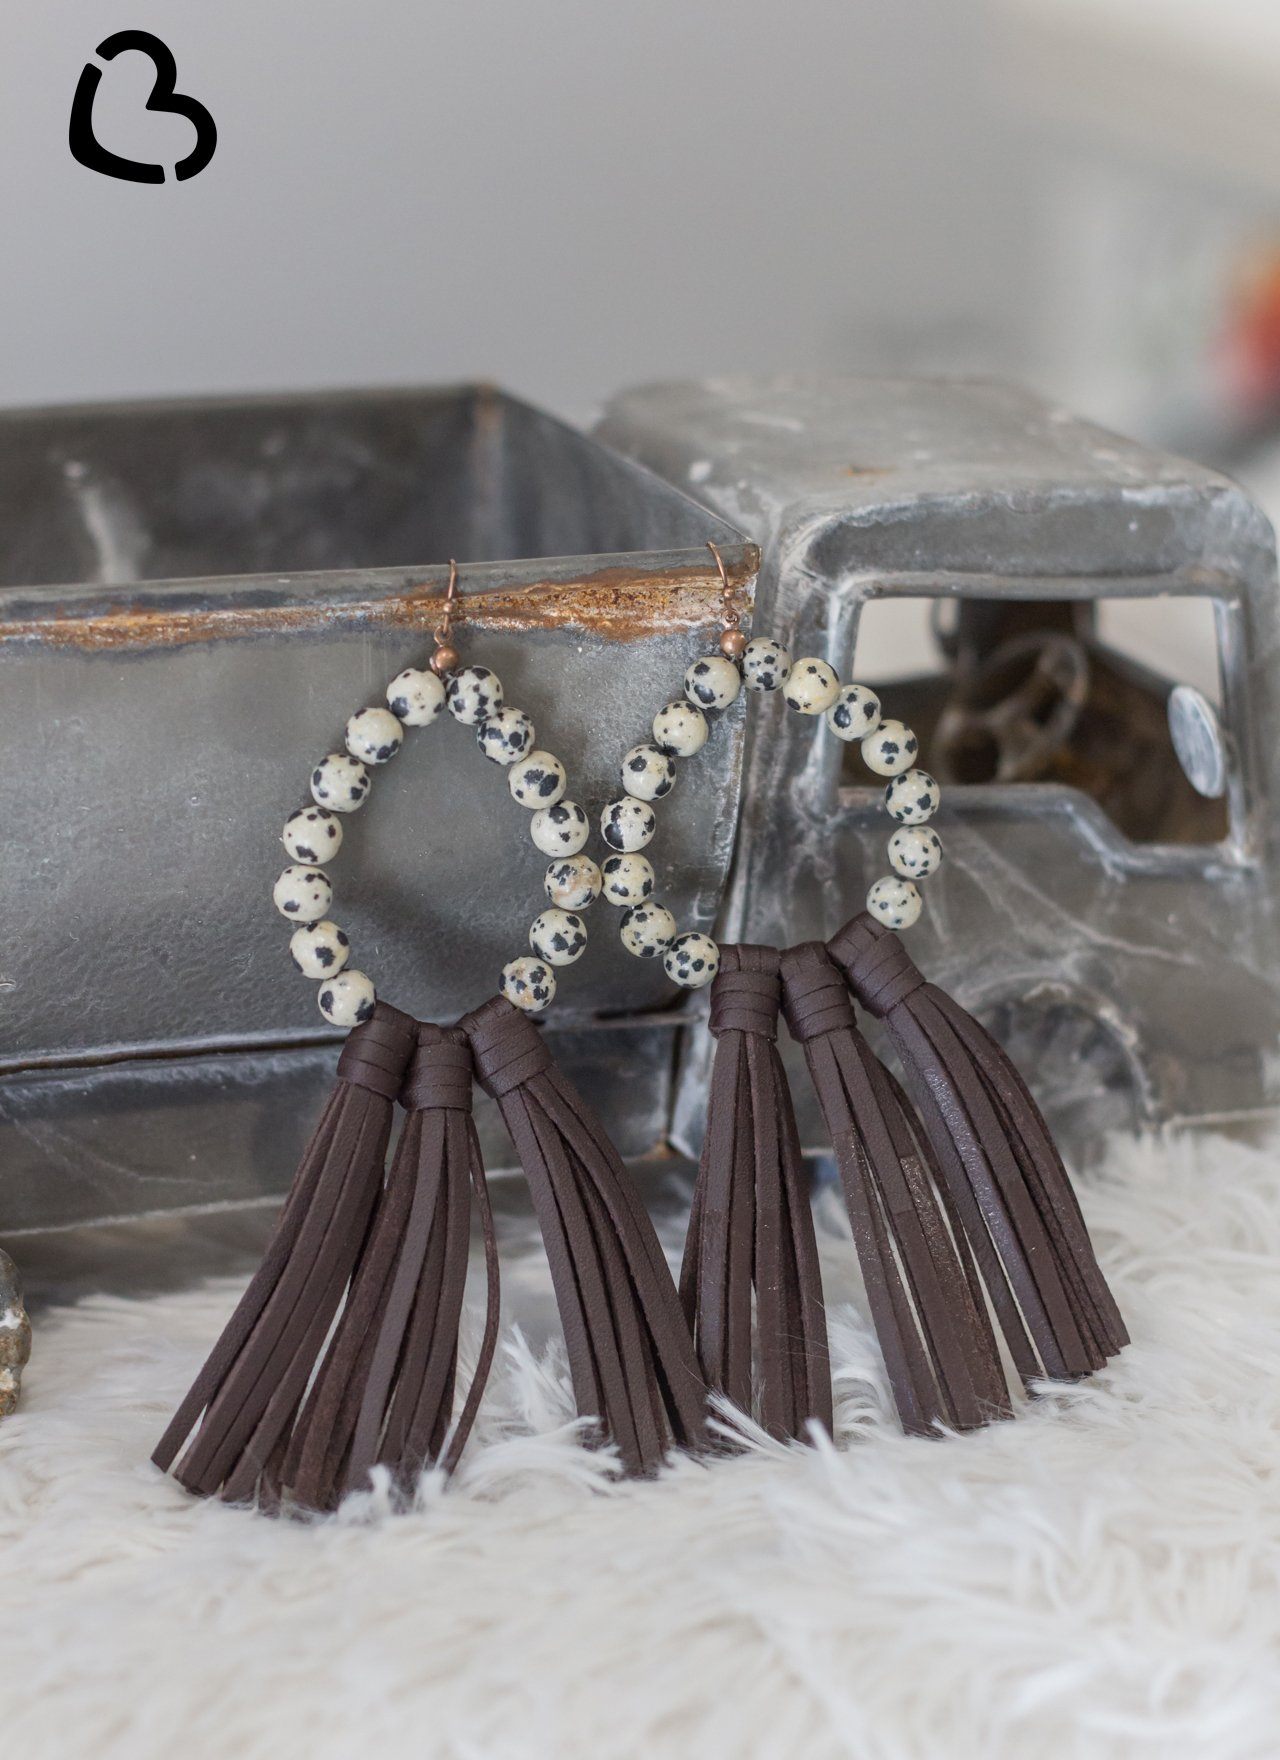 Willa Leather Tassel Earrings with Cow Print Beads and Dark Brown Tassels Earrings 18 